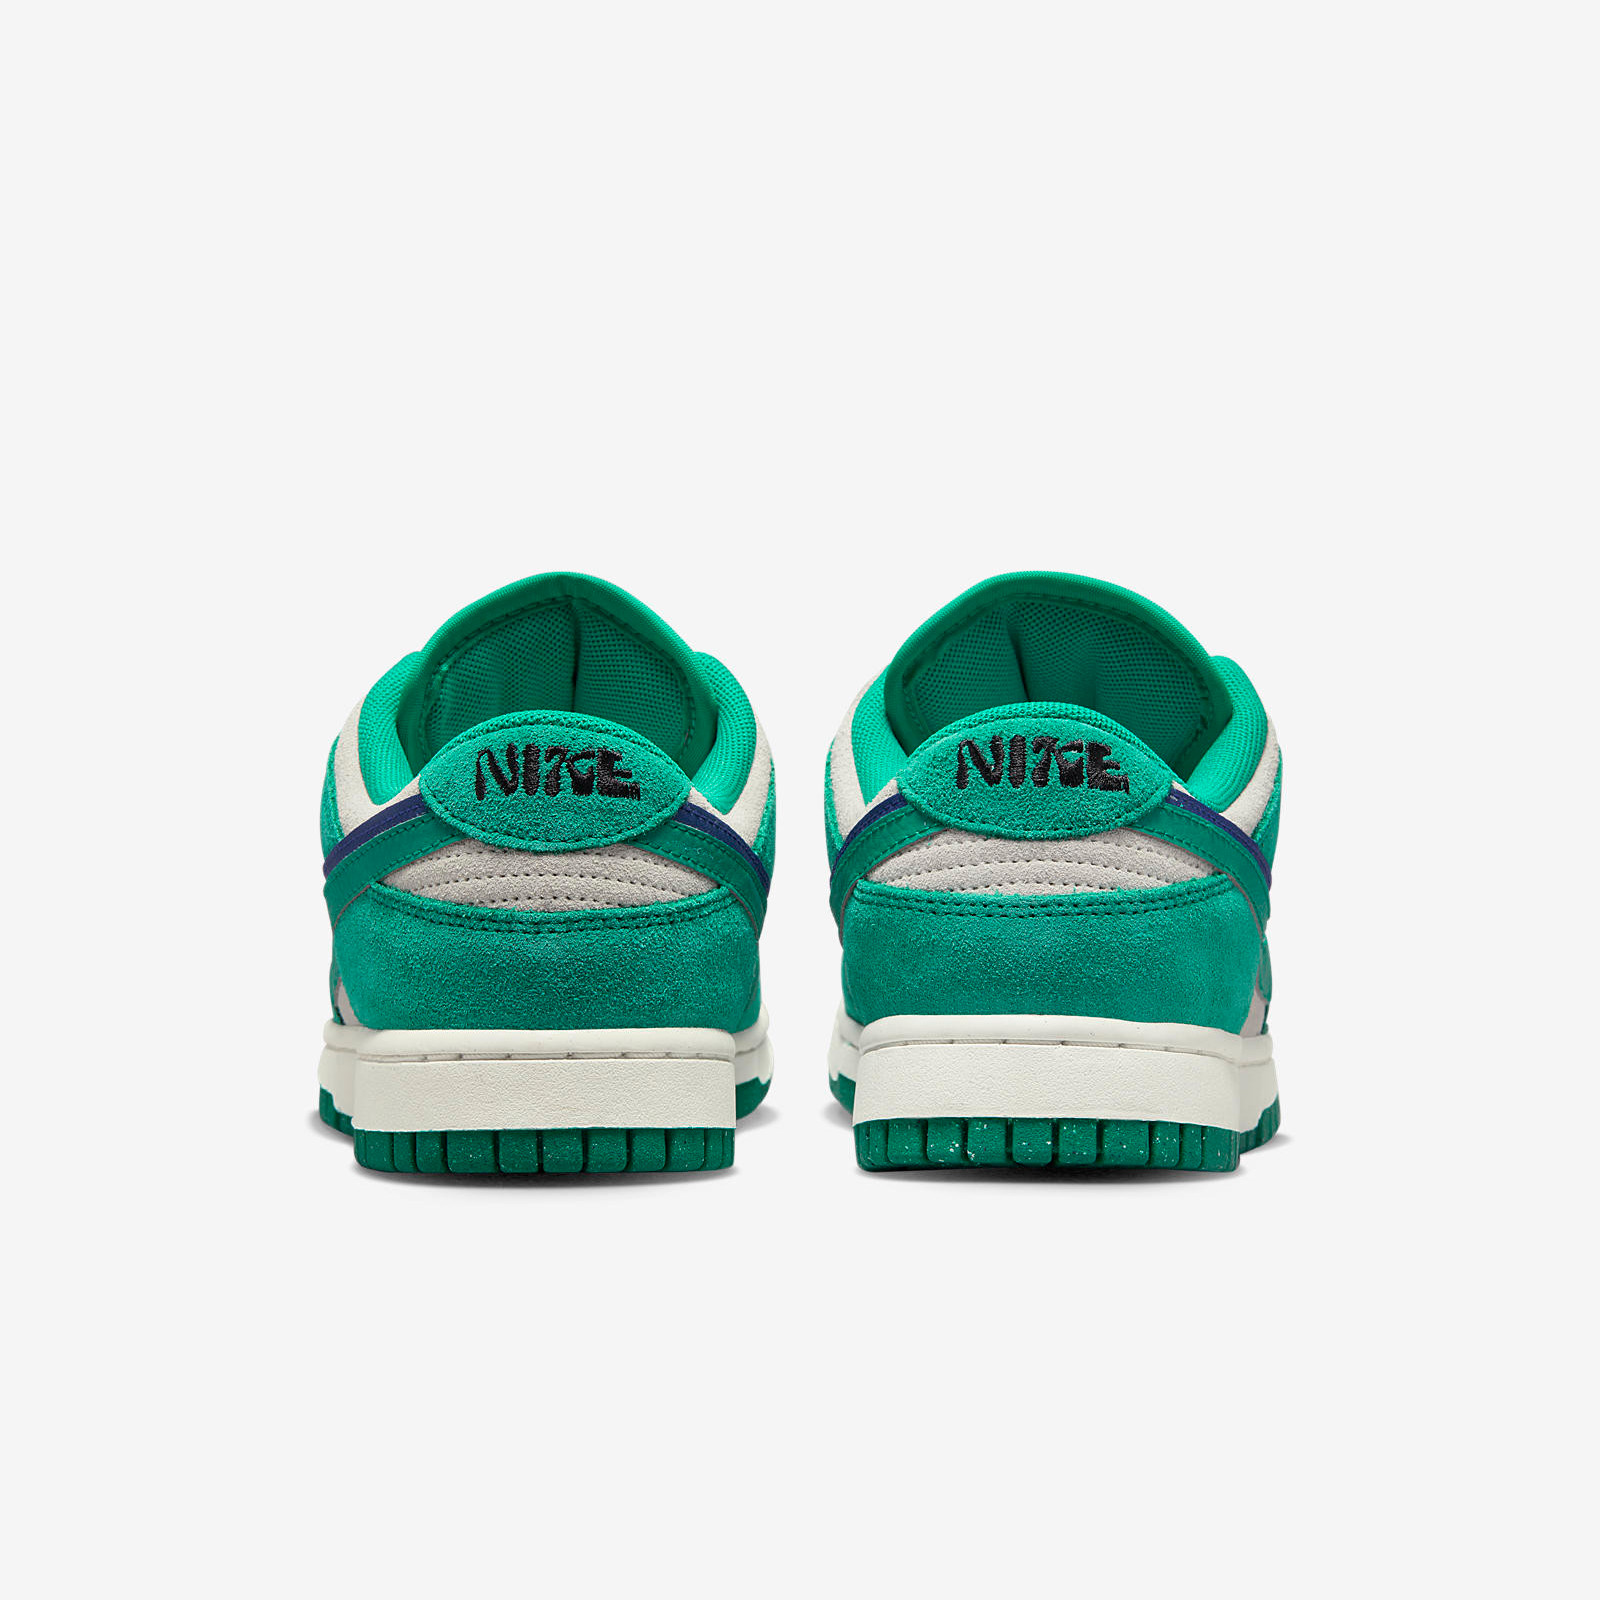 Nike Dunk Low SE
« Neptune Green »